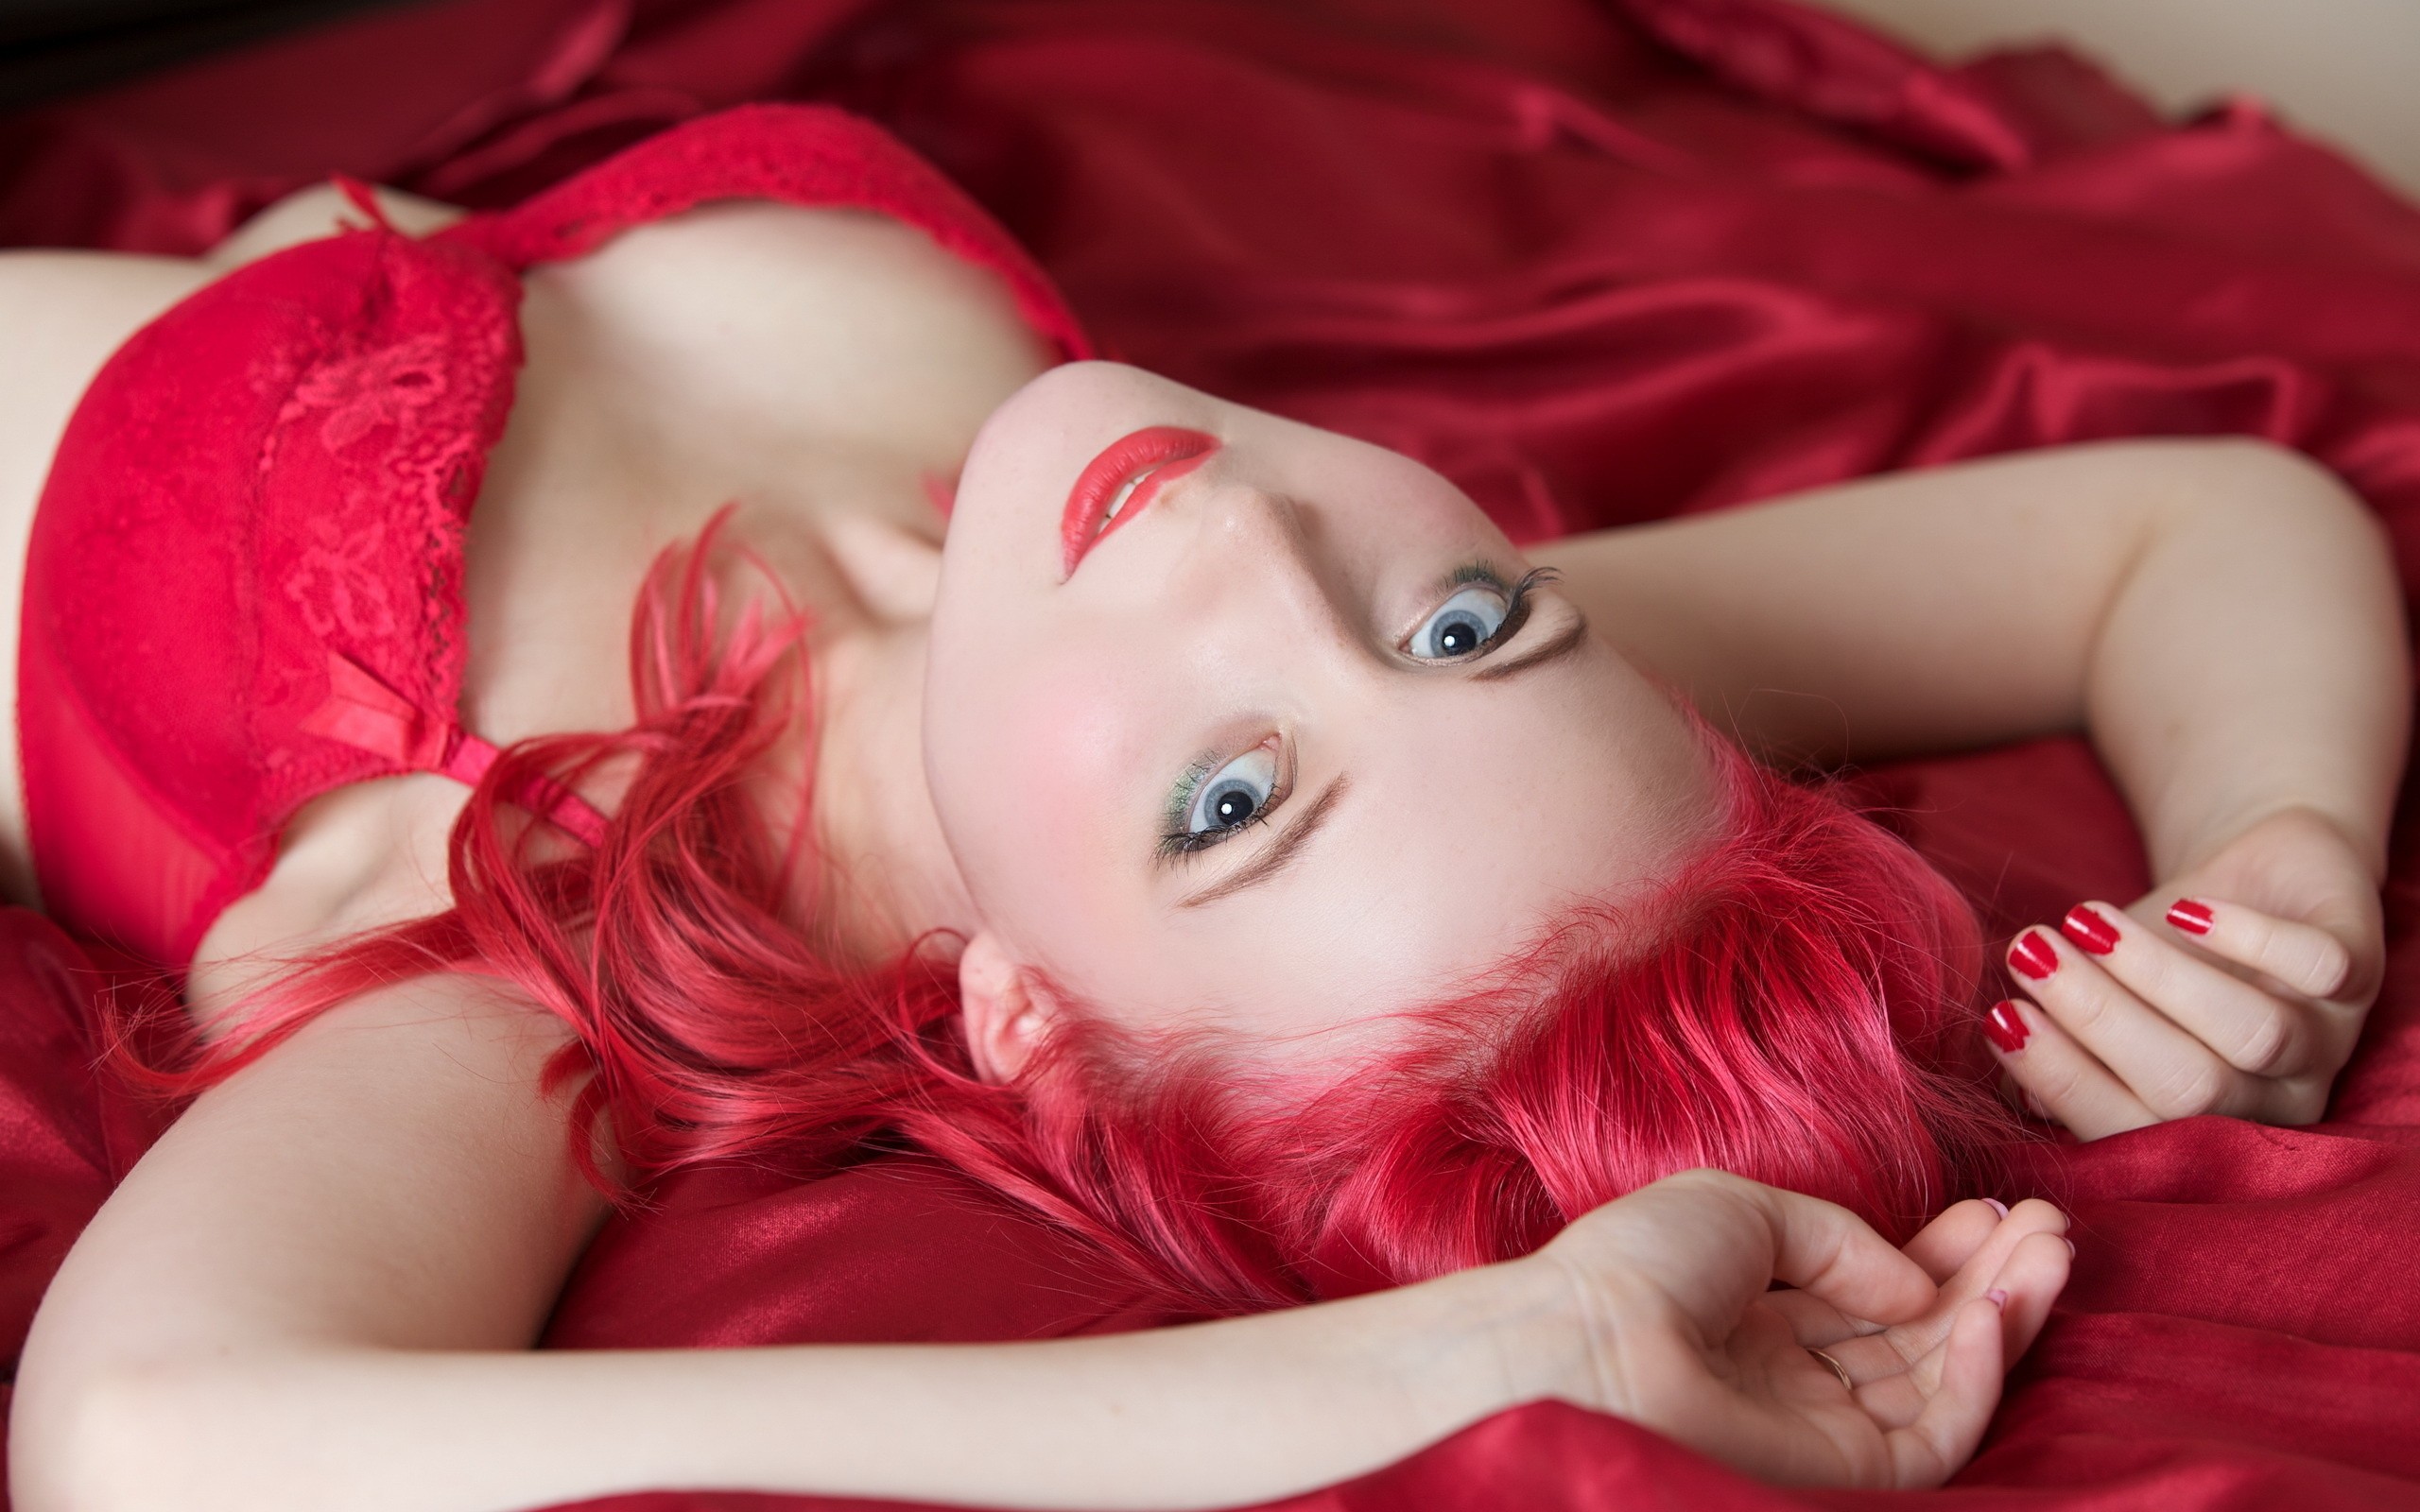 Sex doll redhead